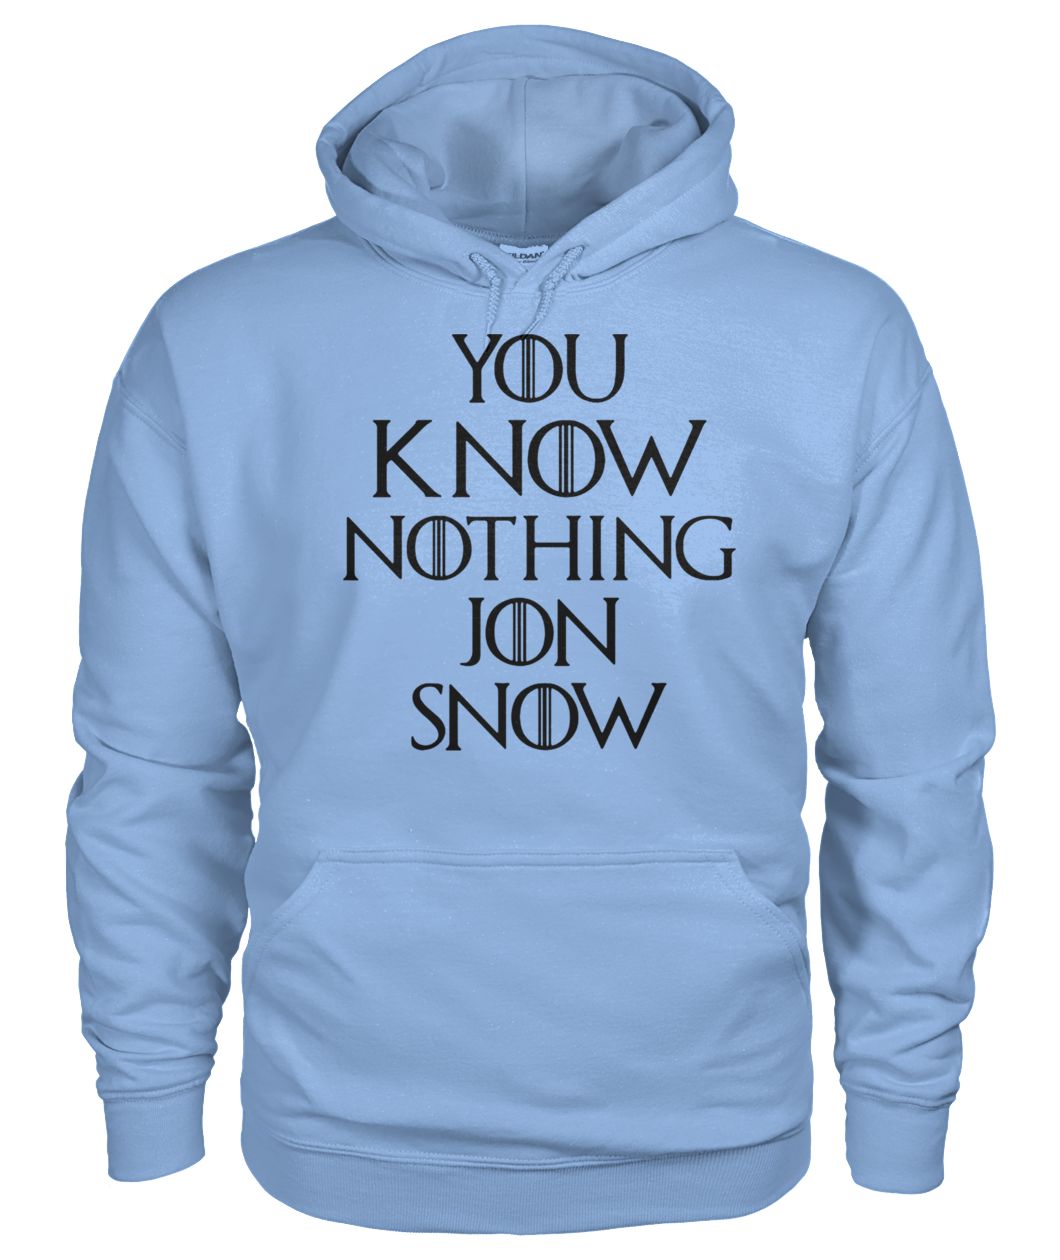 Game of thrones you know nothing jon snow gildan hoodie